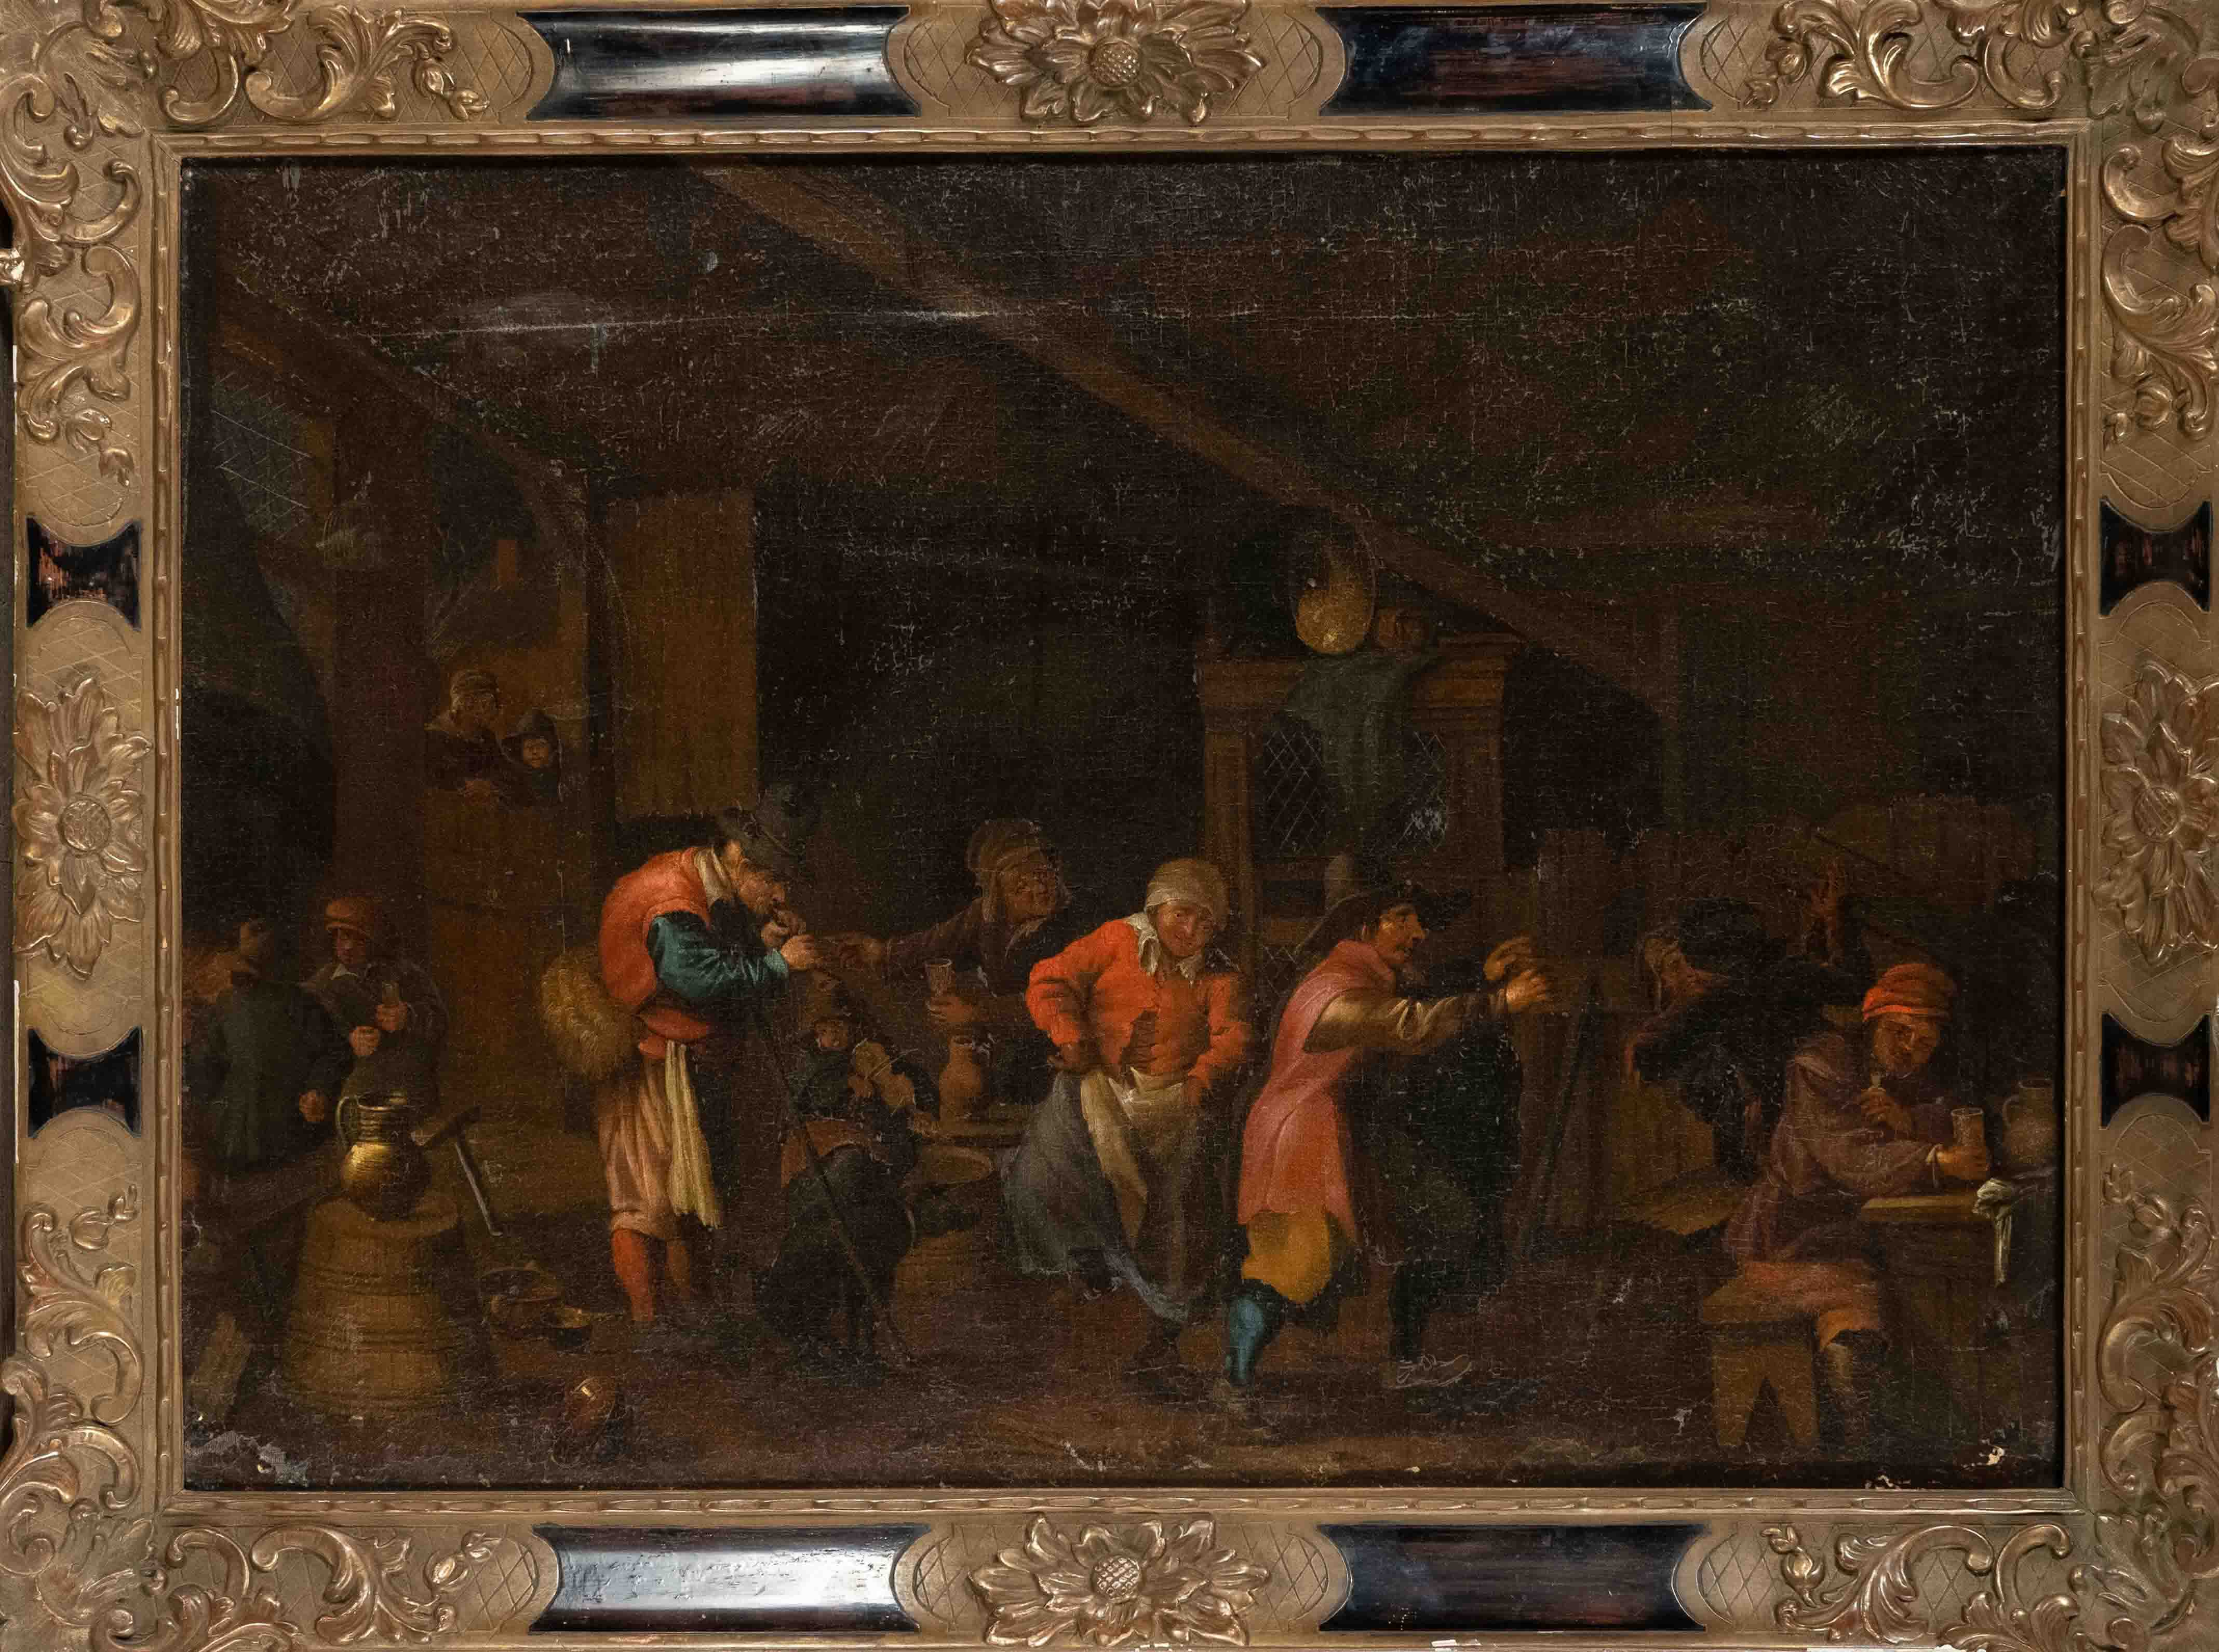 Adriaen van Ostade (1610-1685), succession/surroundings, four-figure, coarse inn scene with moral